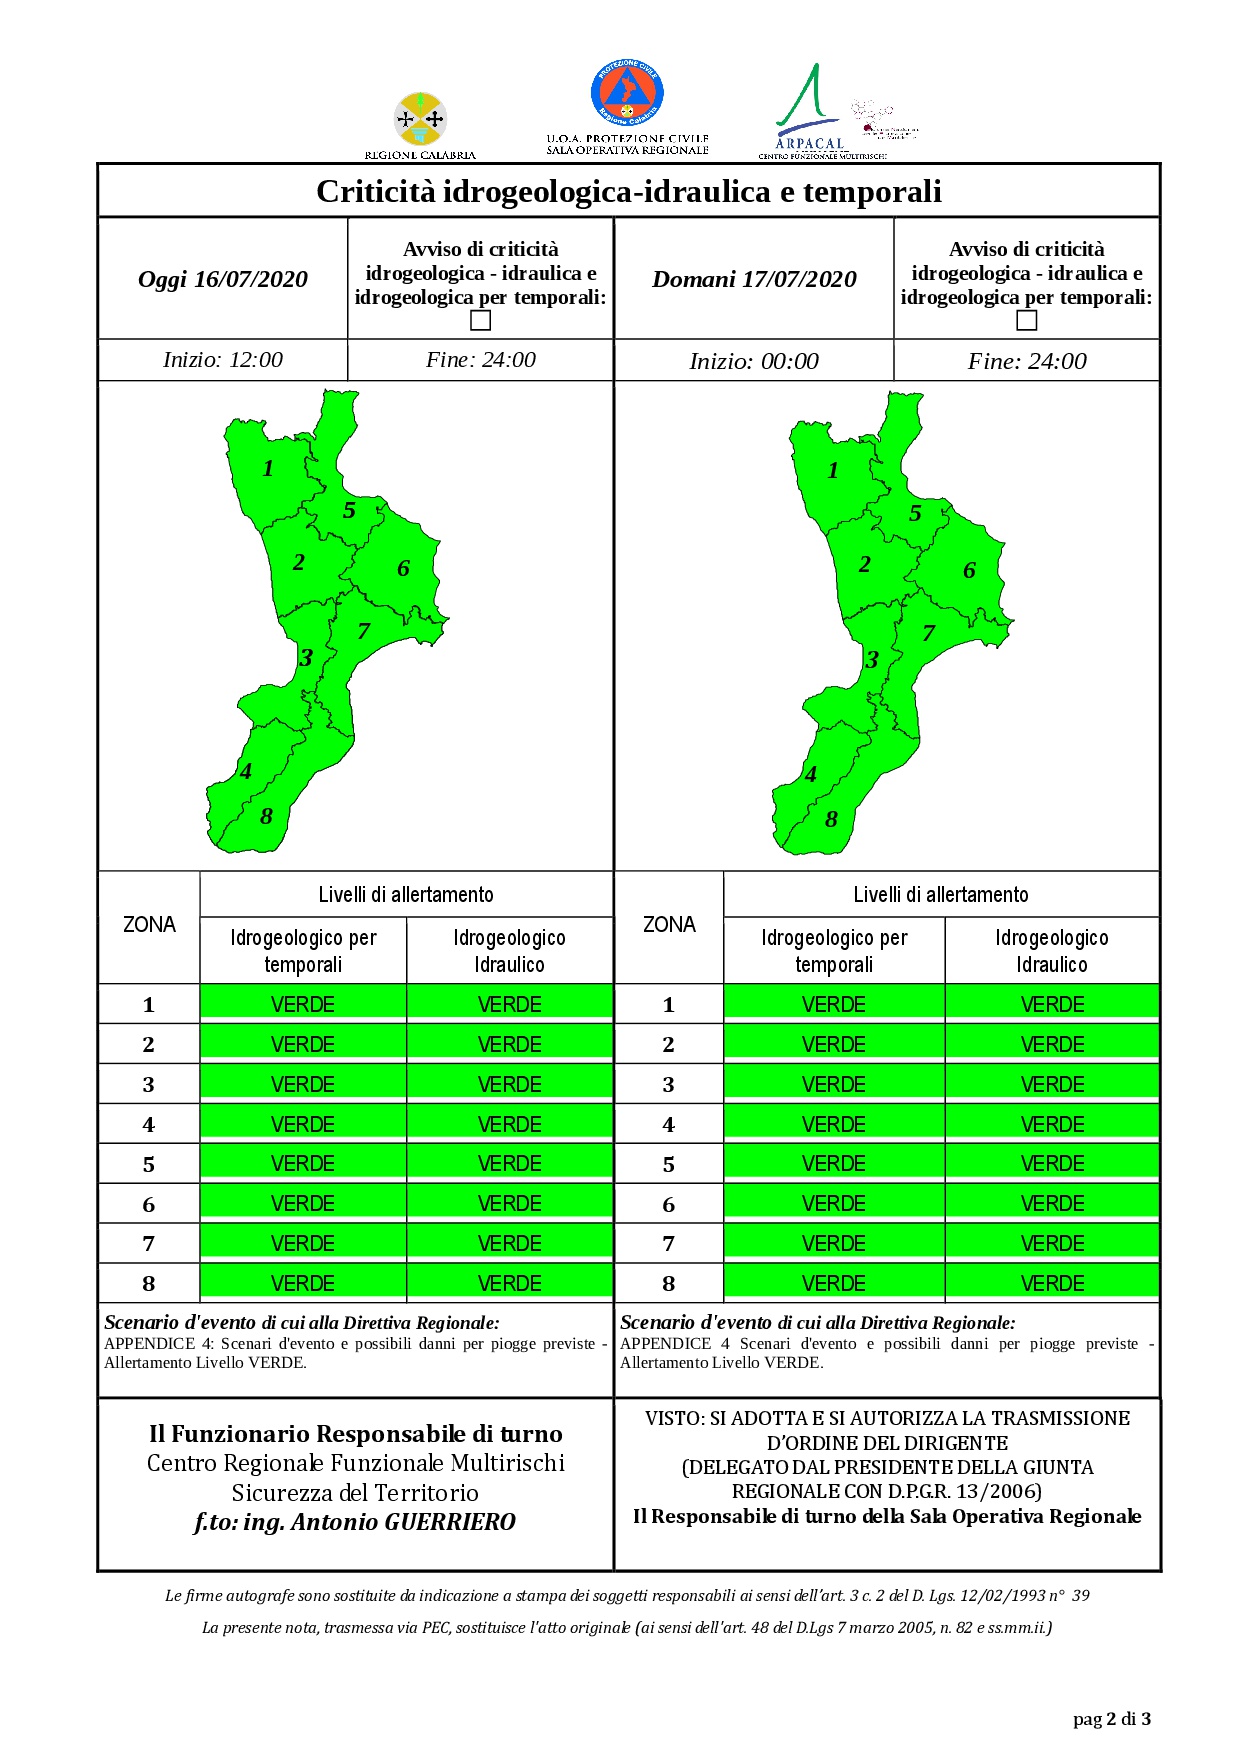 Criticità idrogeologica-idraulica e temporali in Calabria 16-07-2020